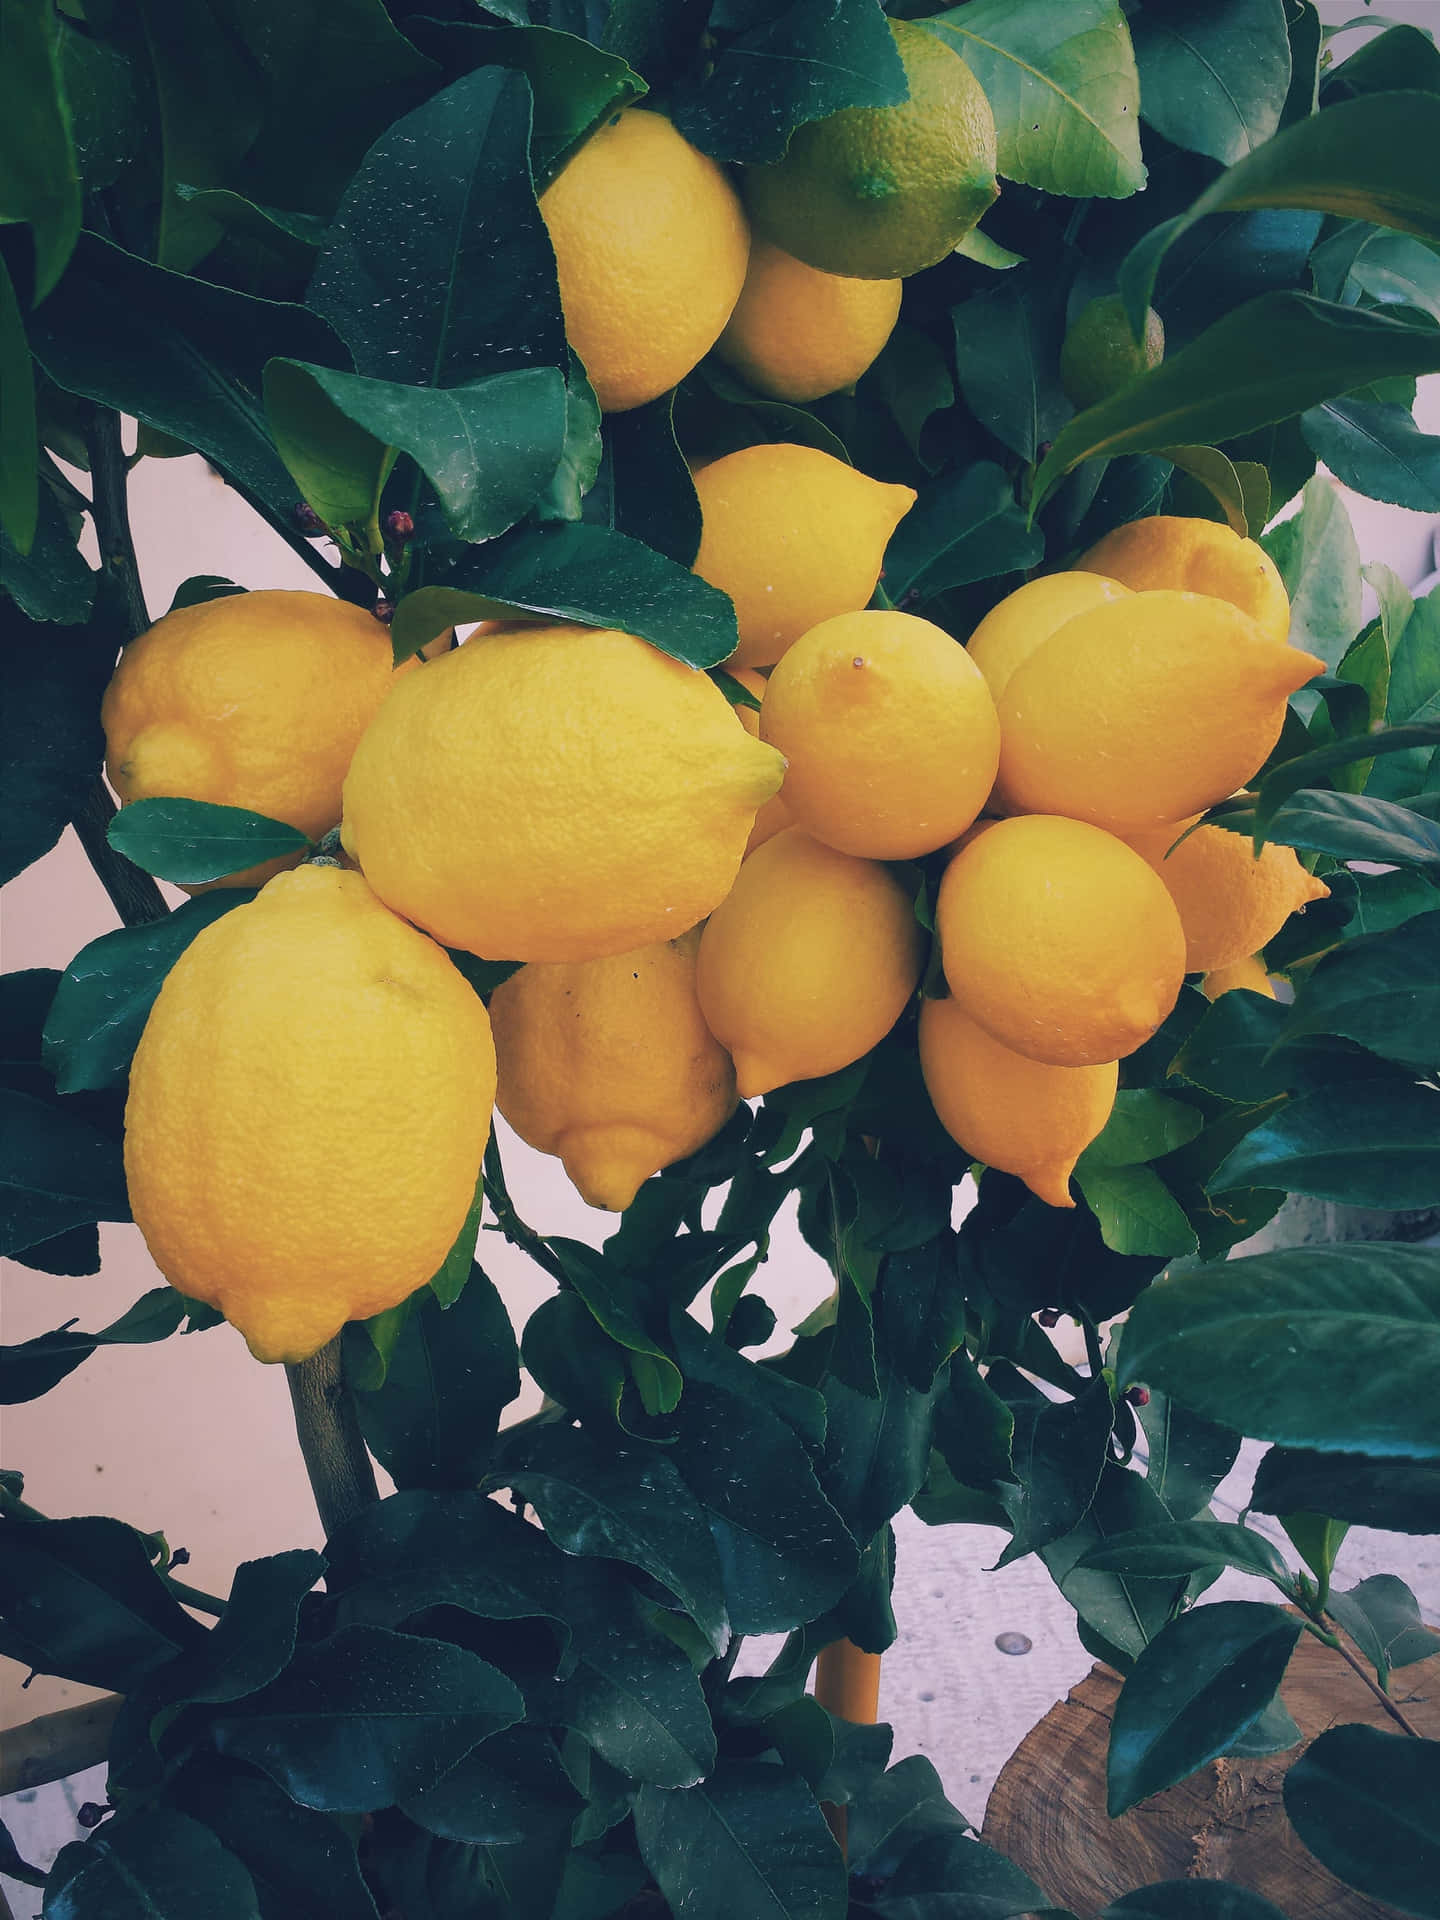 Fresh And Vibrant Lemon Background